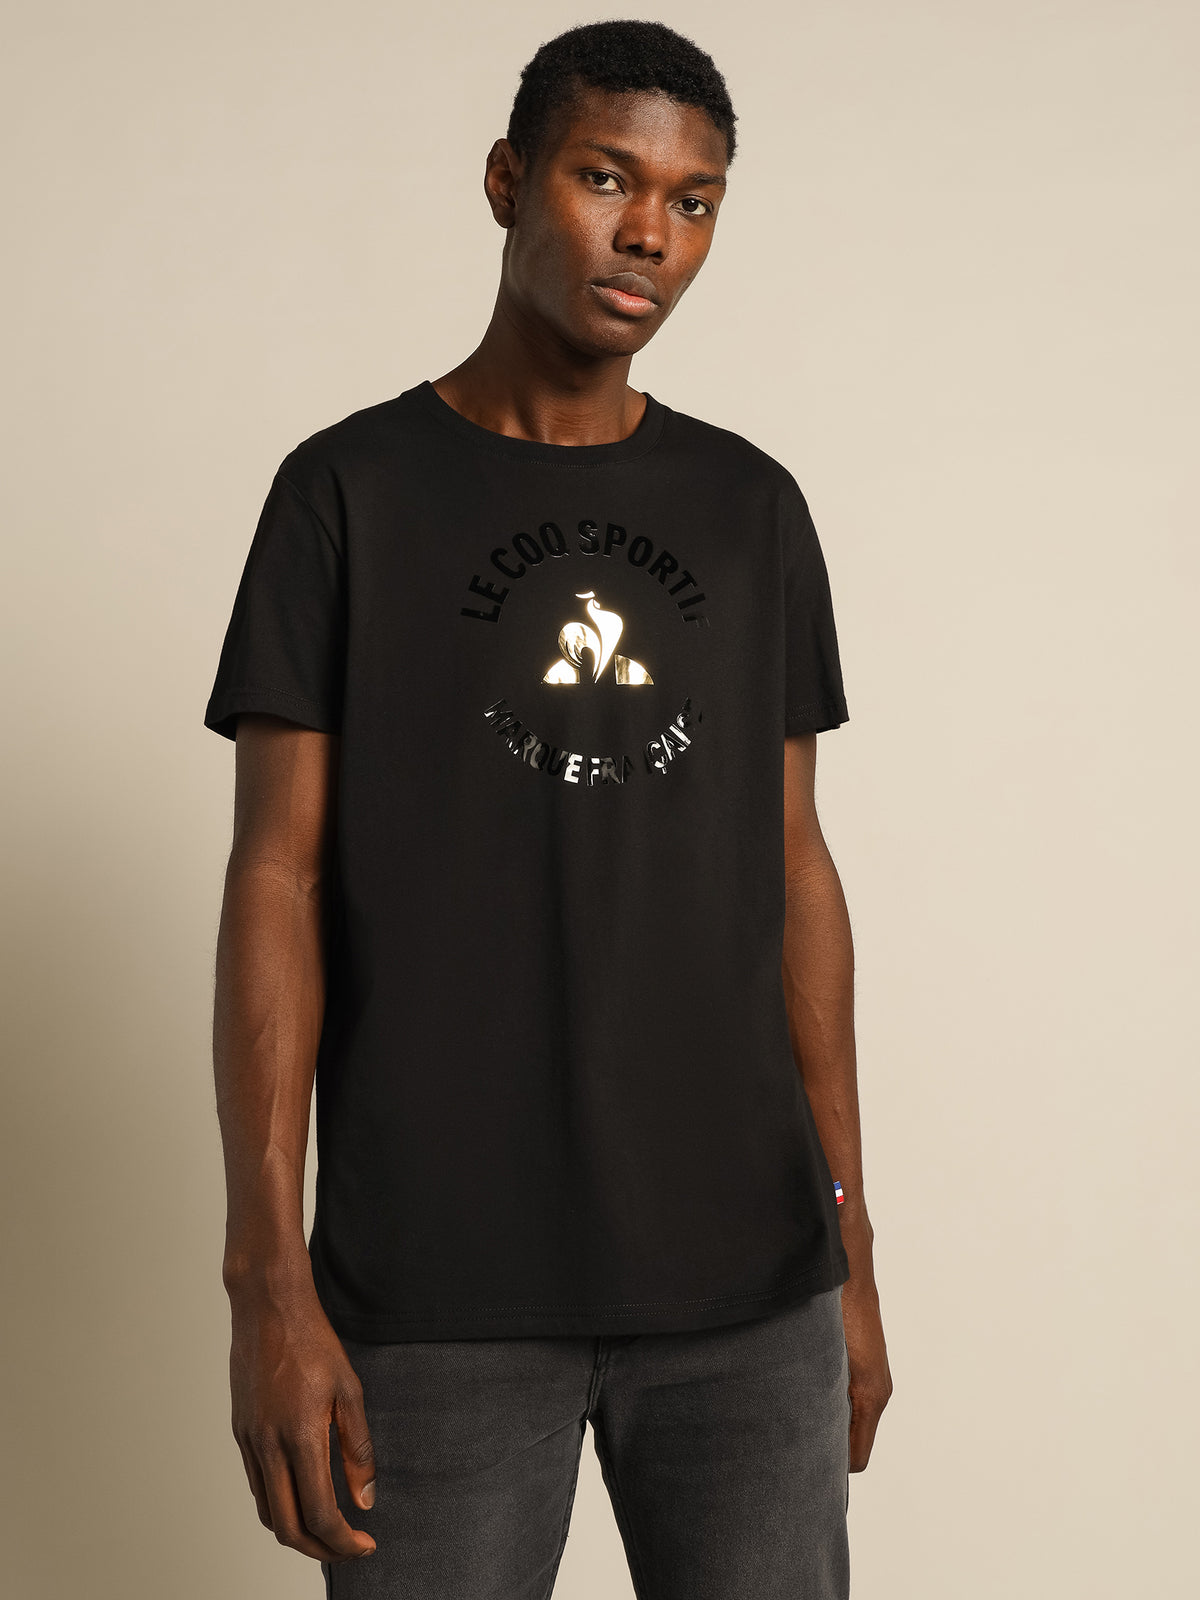 Echelon Foil T-Shirt in Black